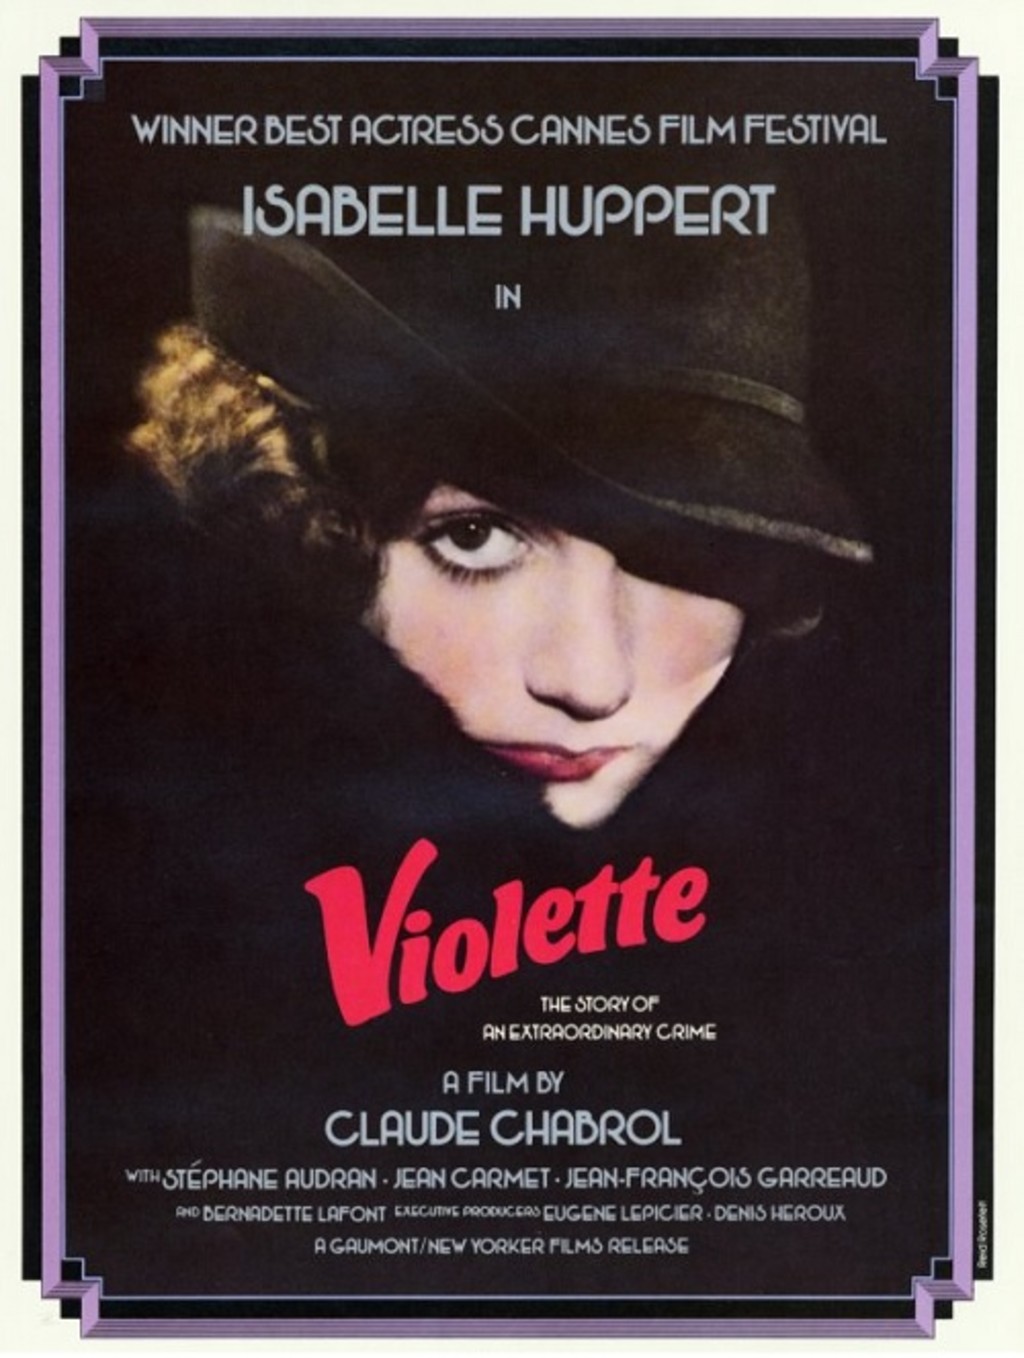 Watch Violette On Netflix Today